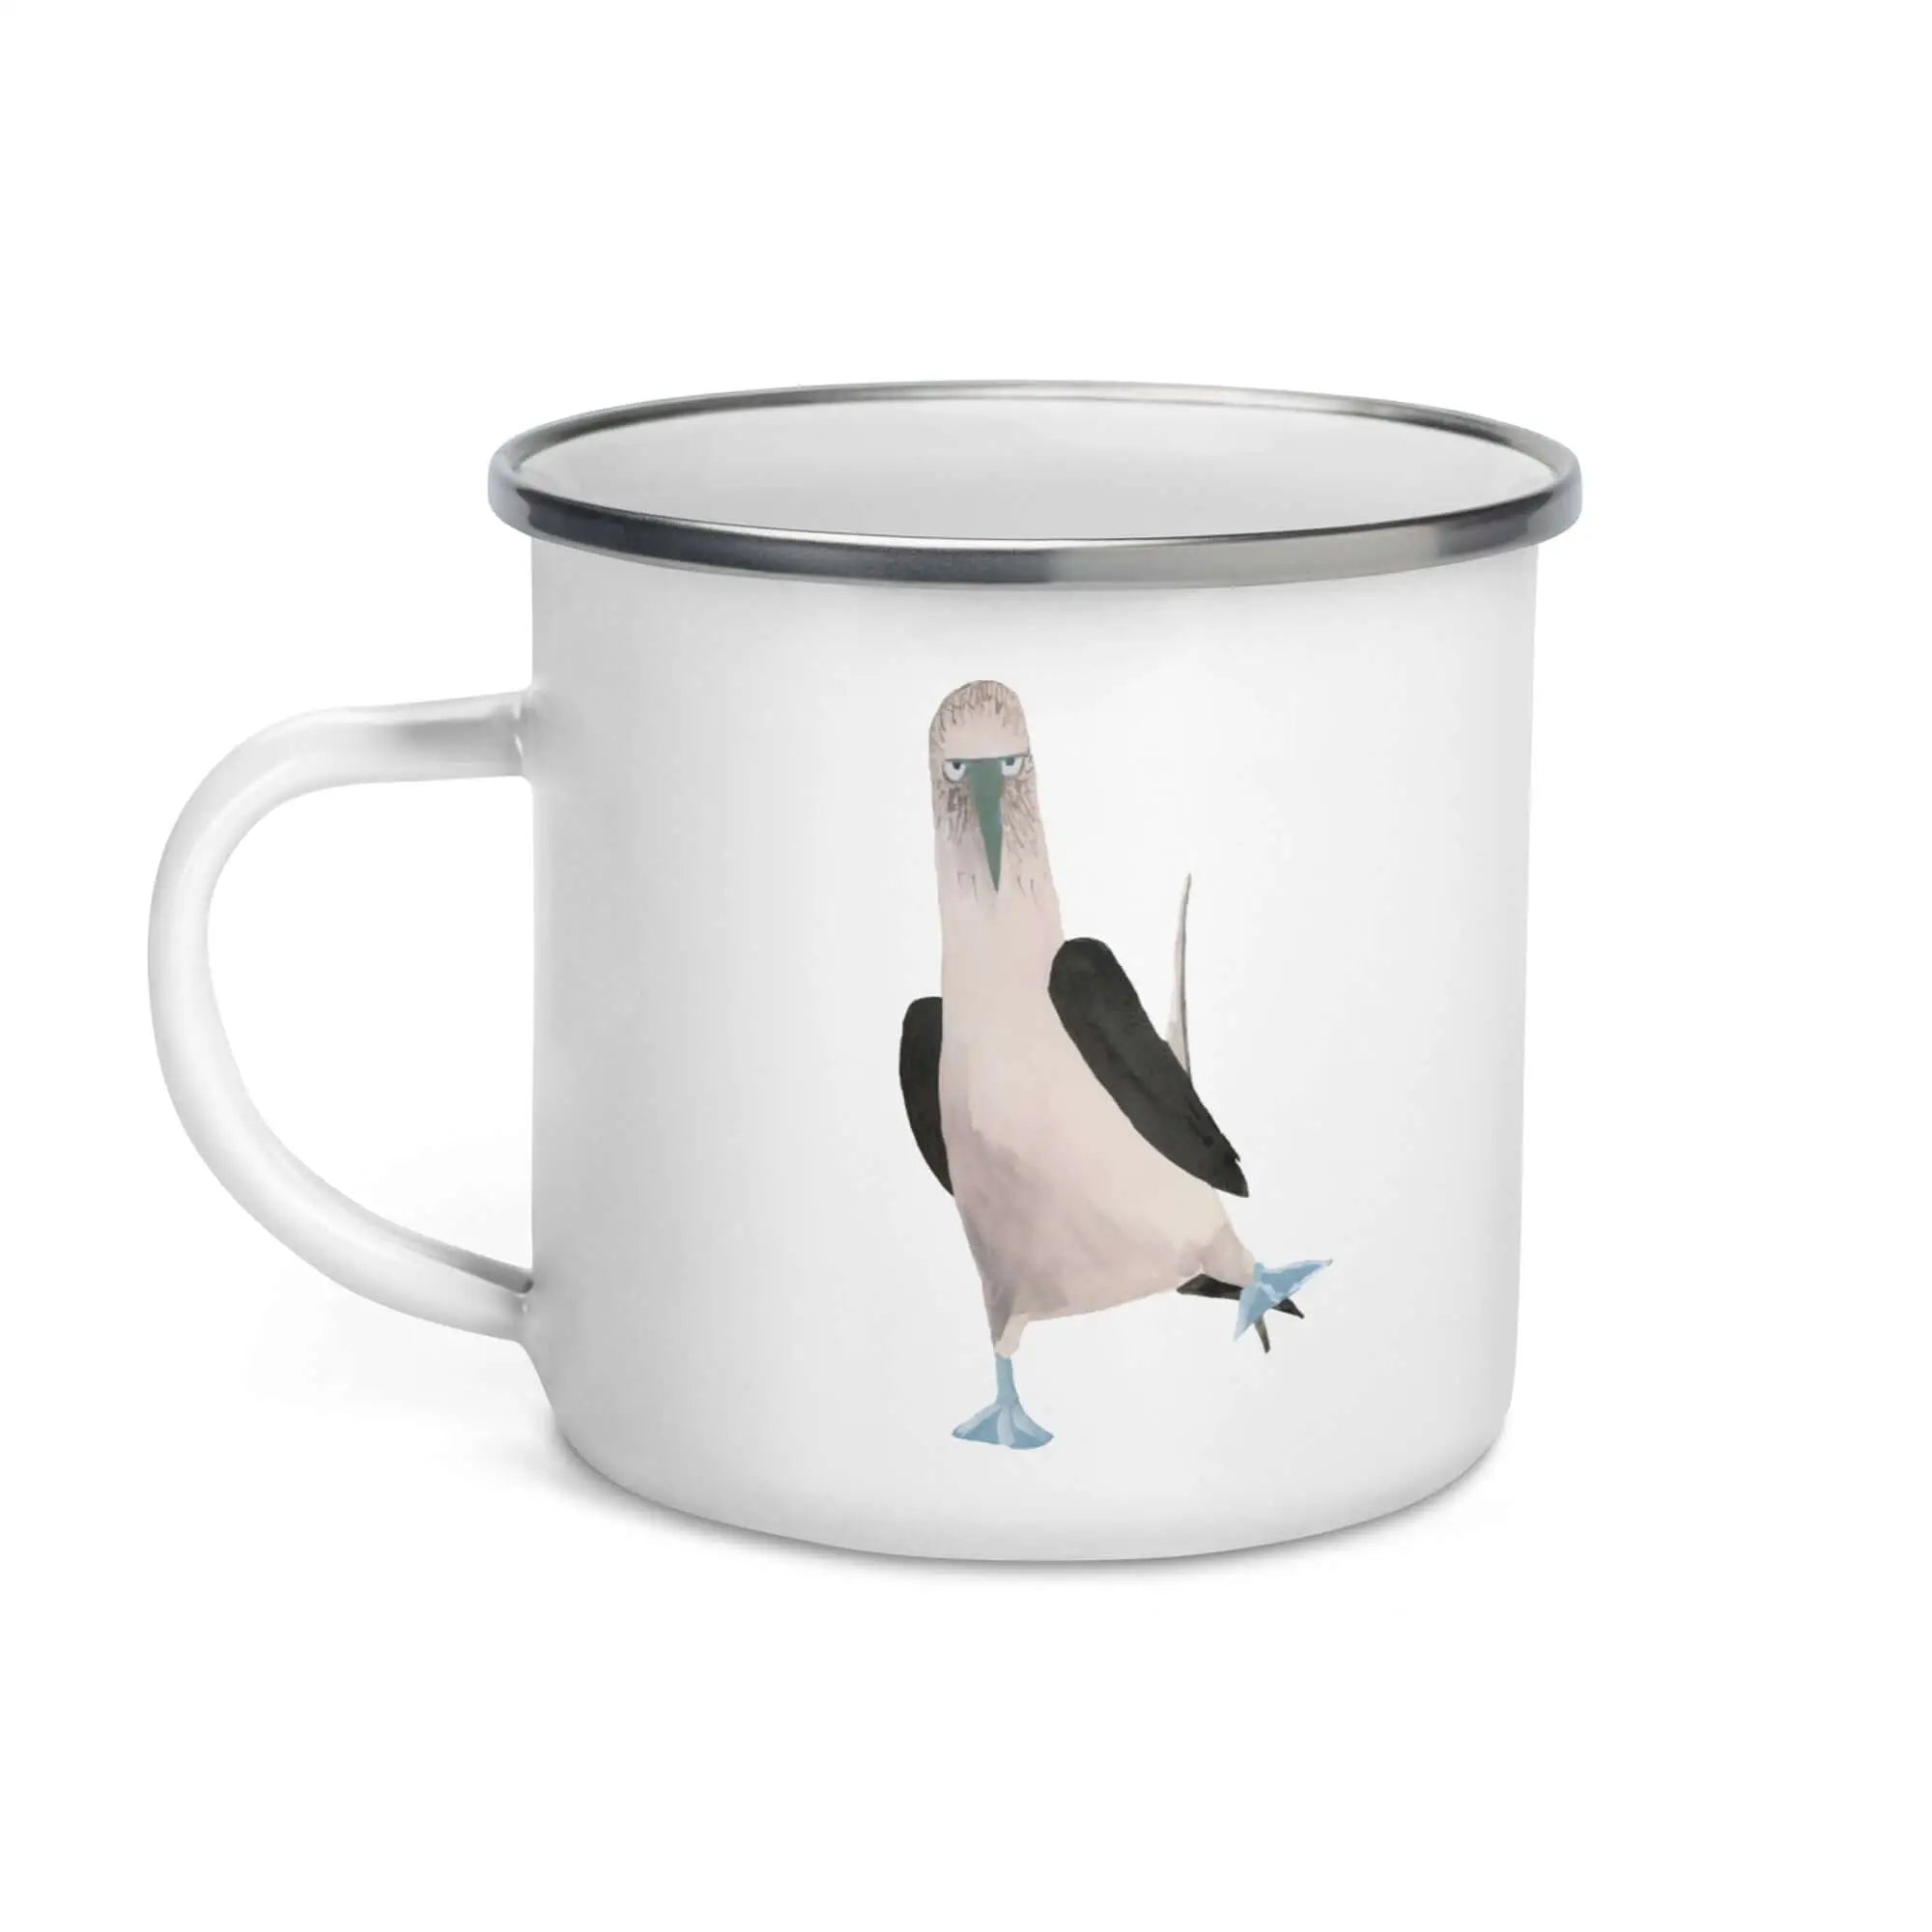 Enamel mug featuring a bird design - Booby